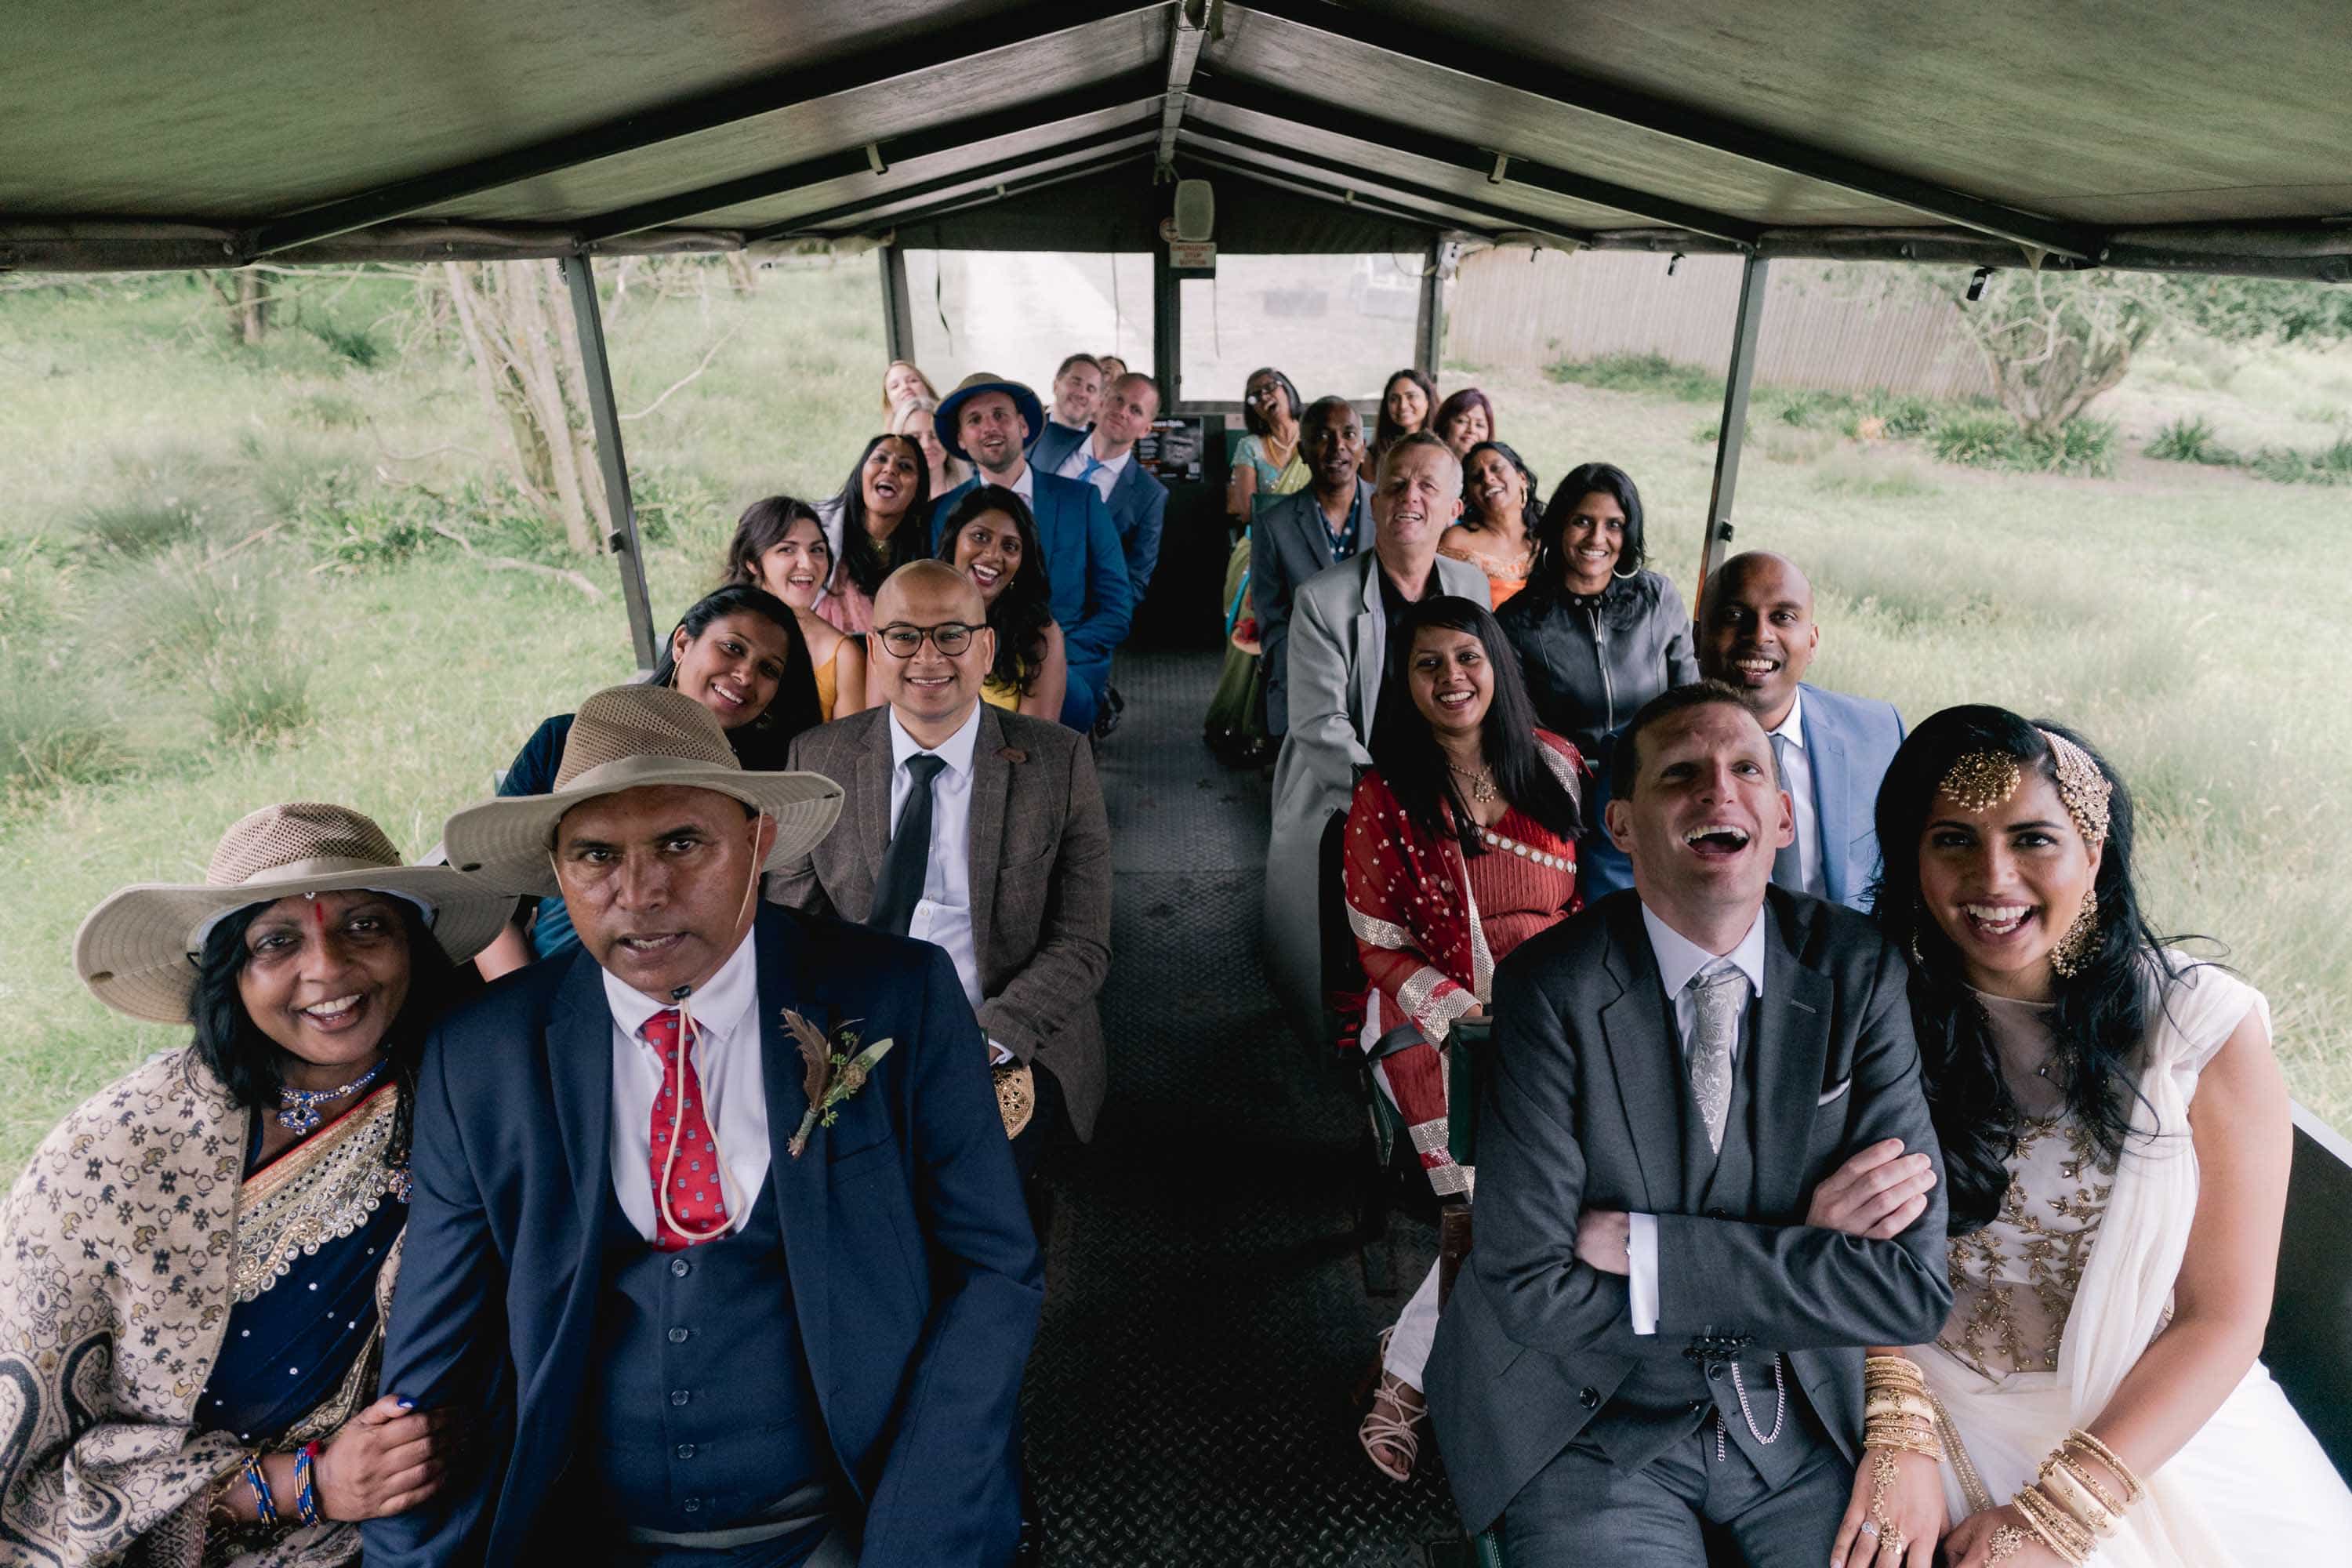 Wedding guests on the safari tour at Port Lympne Safari Park in Kent.